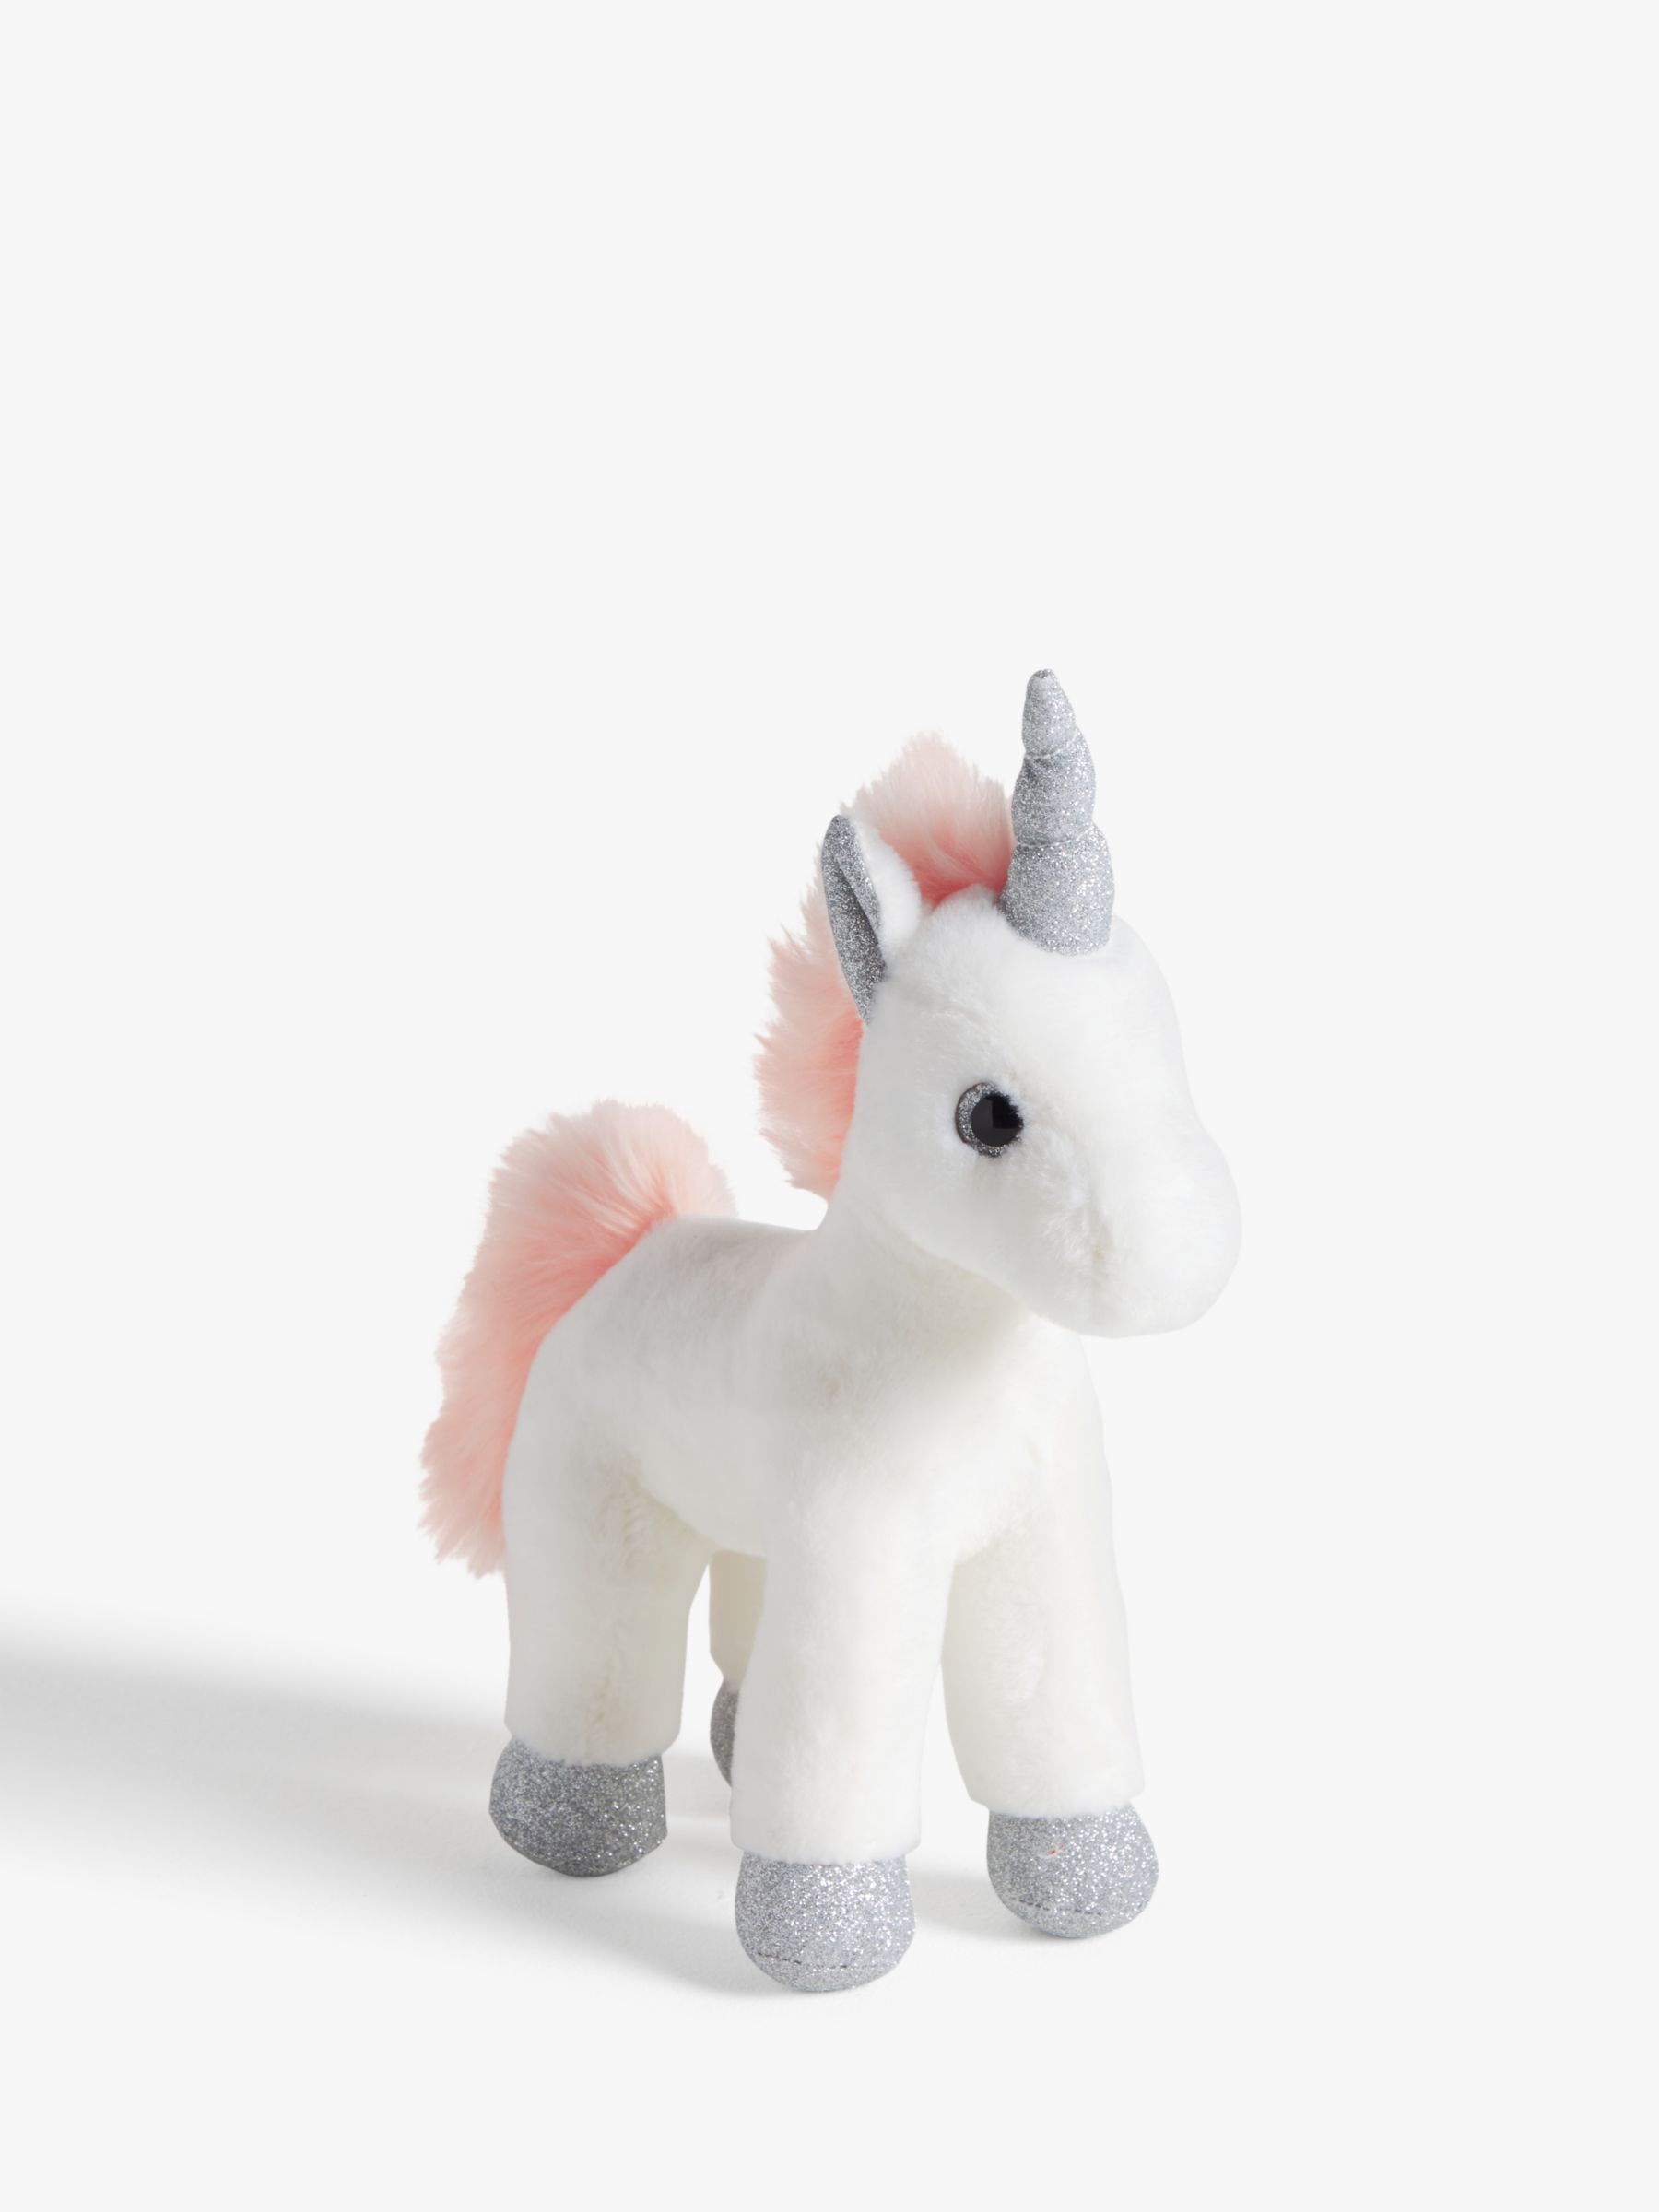 unicorn cuddly toy